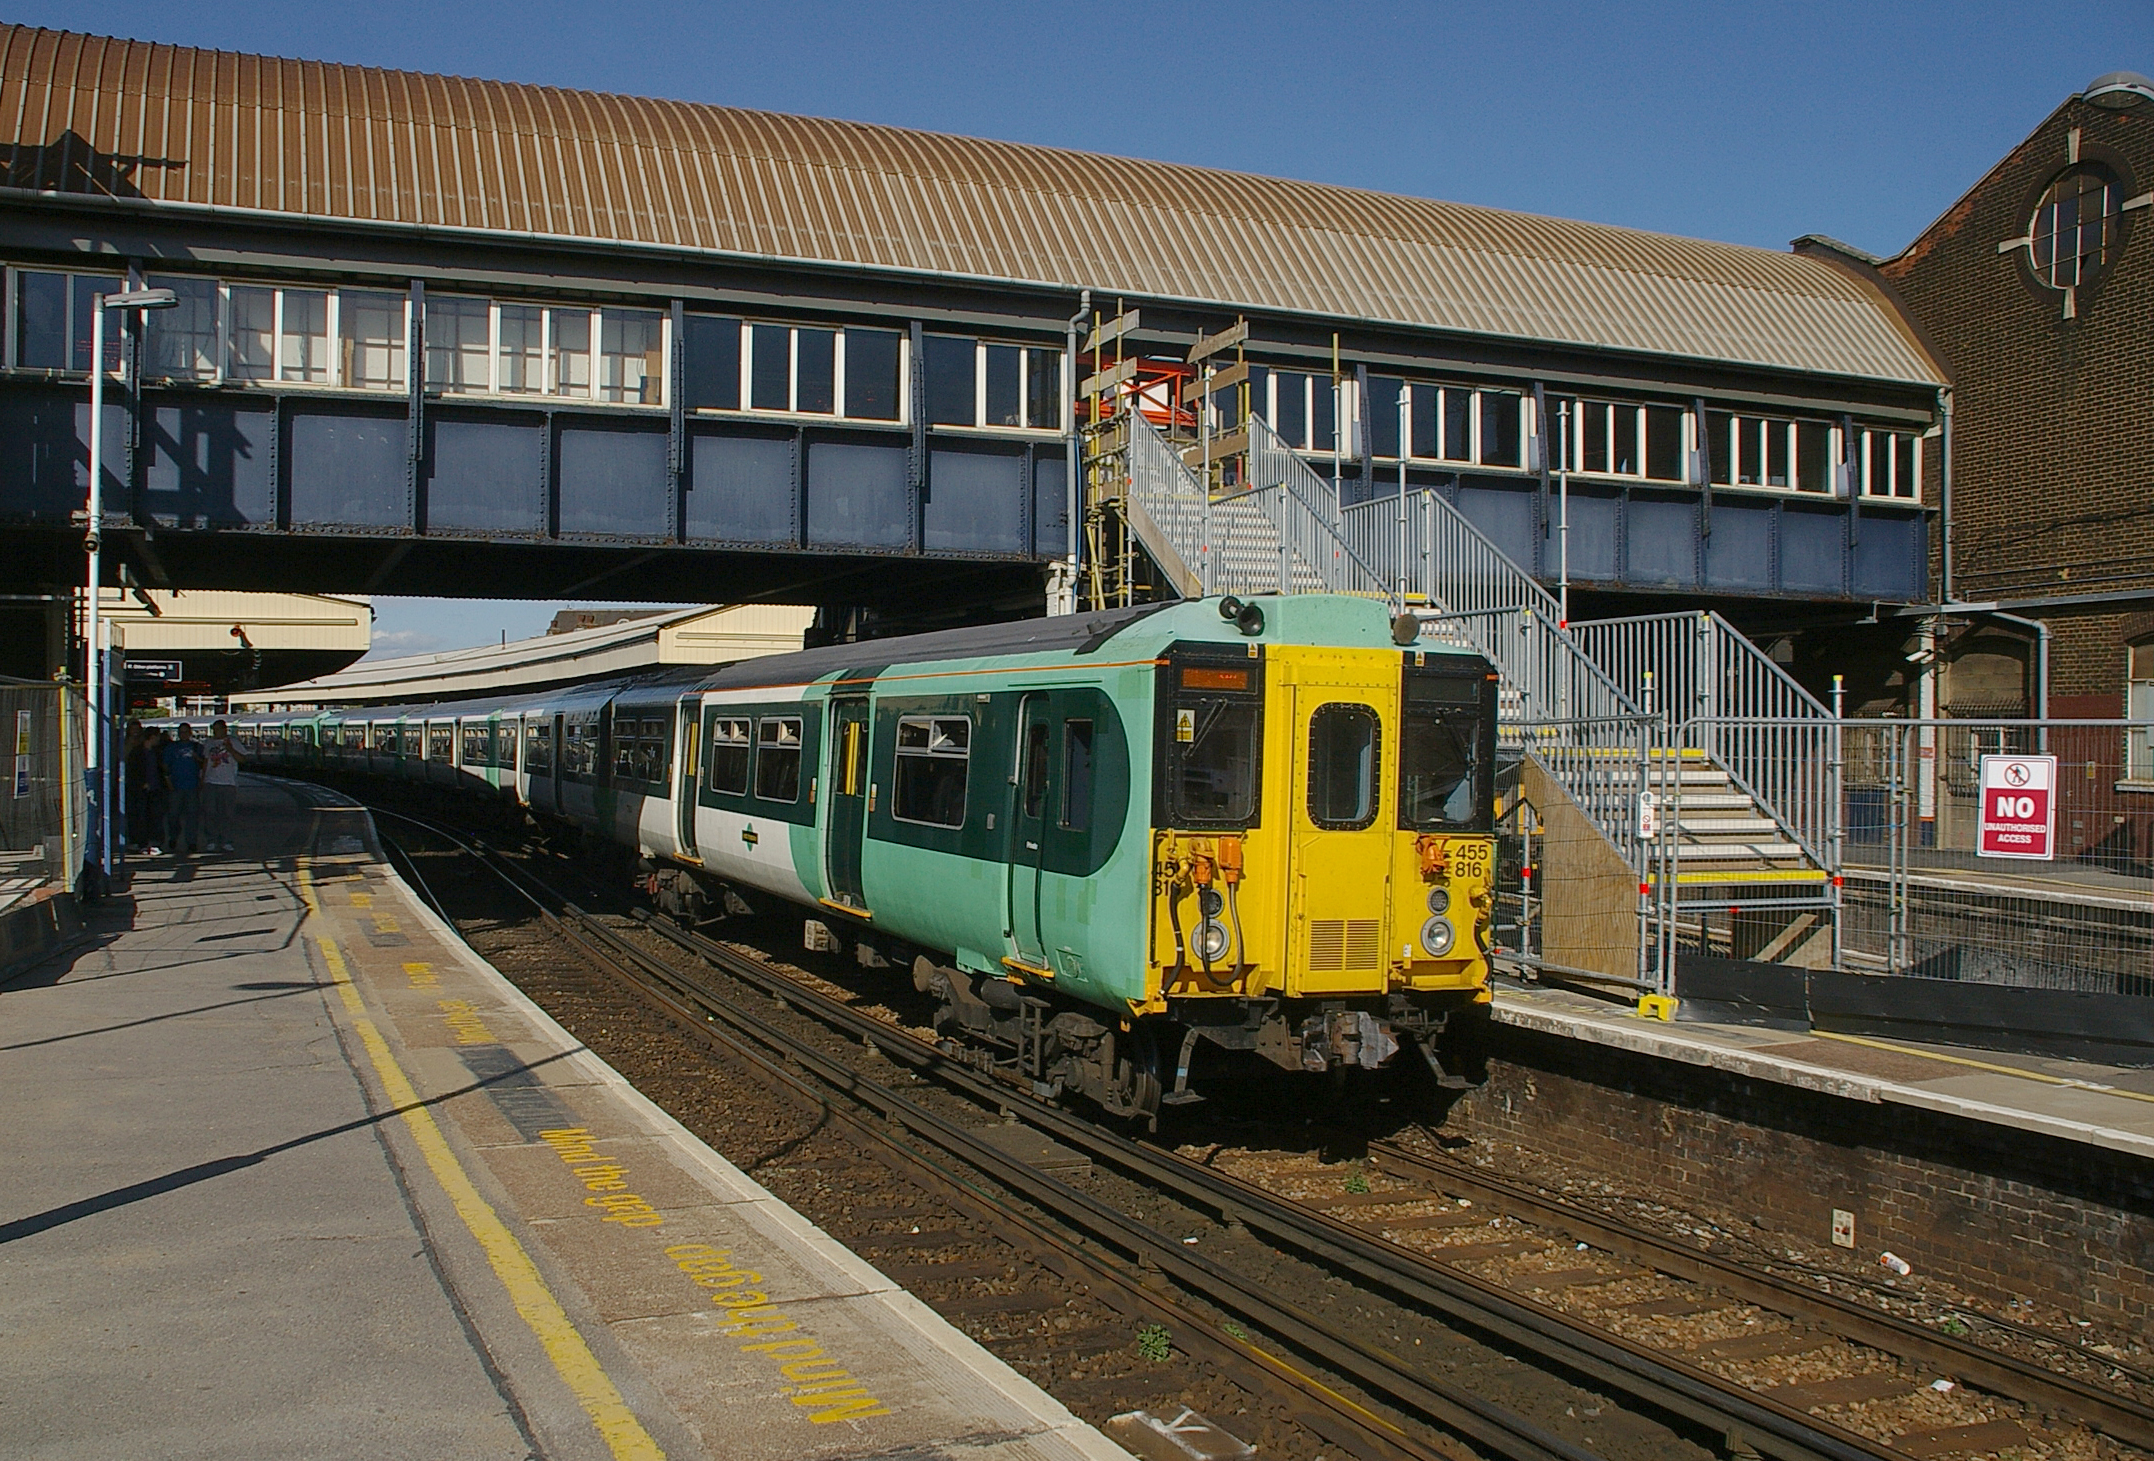 Clapham Junction railway station MMB 17 455816